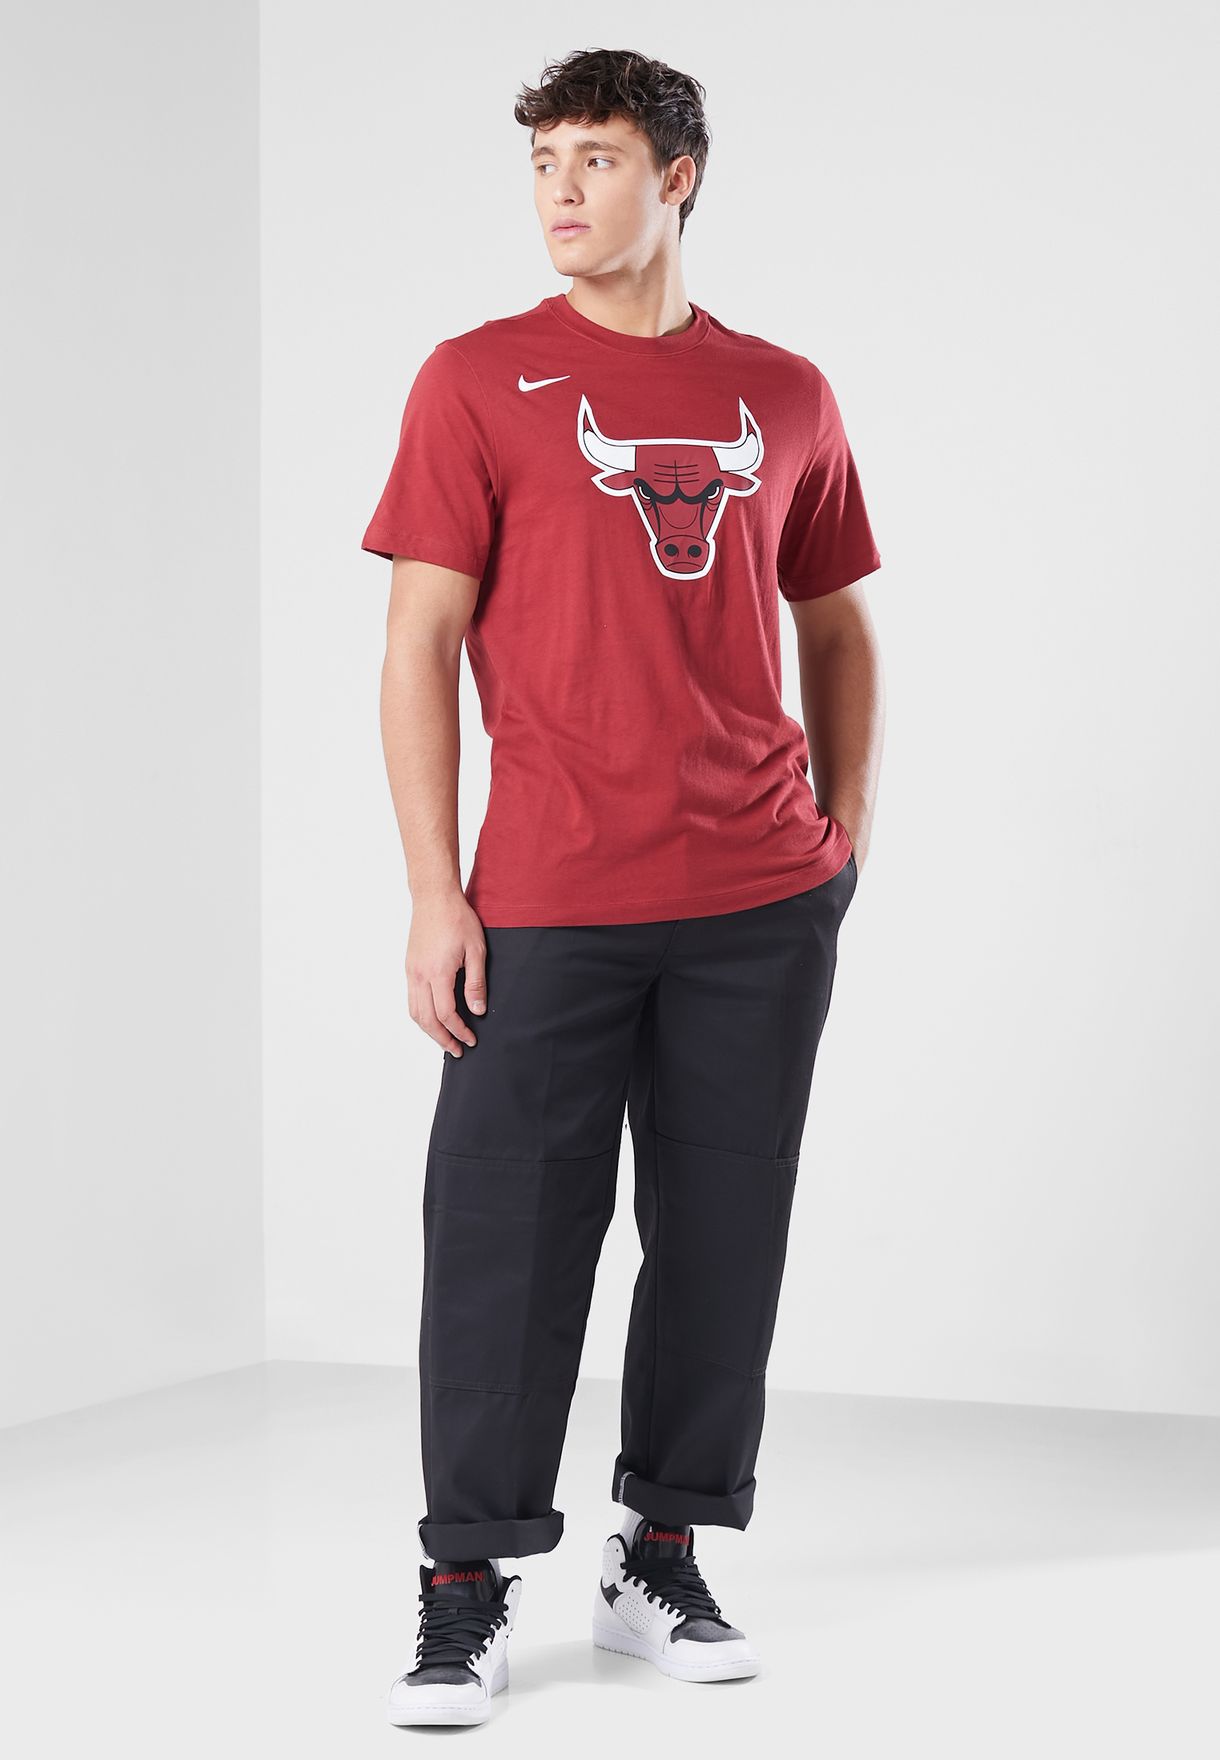 Chicago Bulls City Edition Warm Up T-Shirt